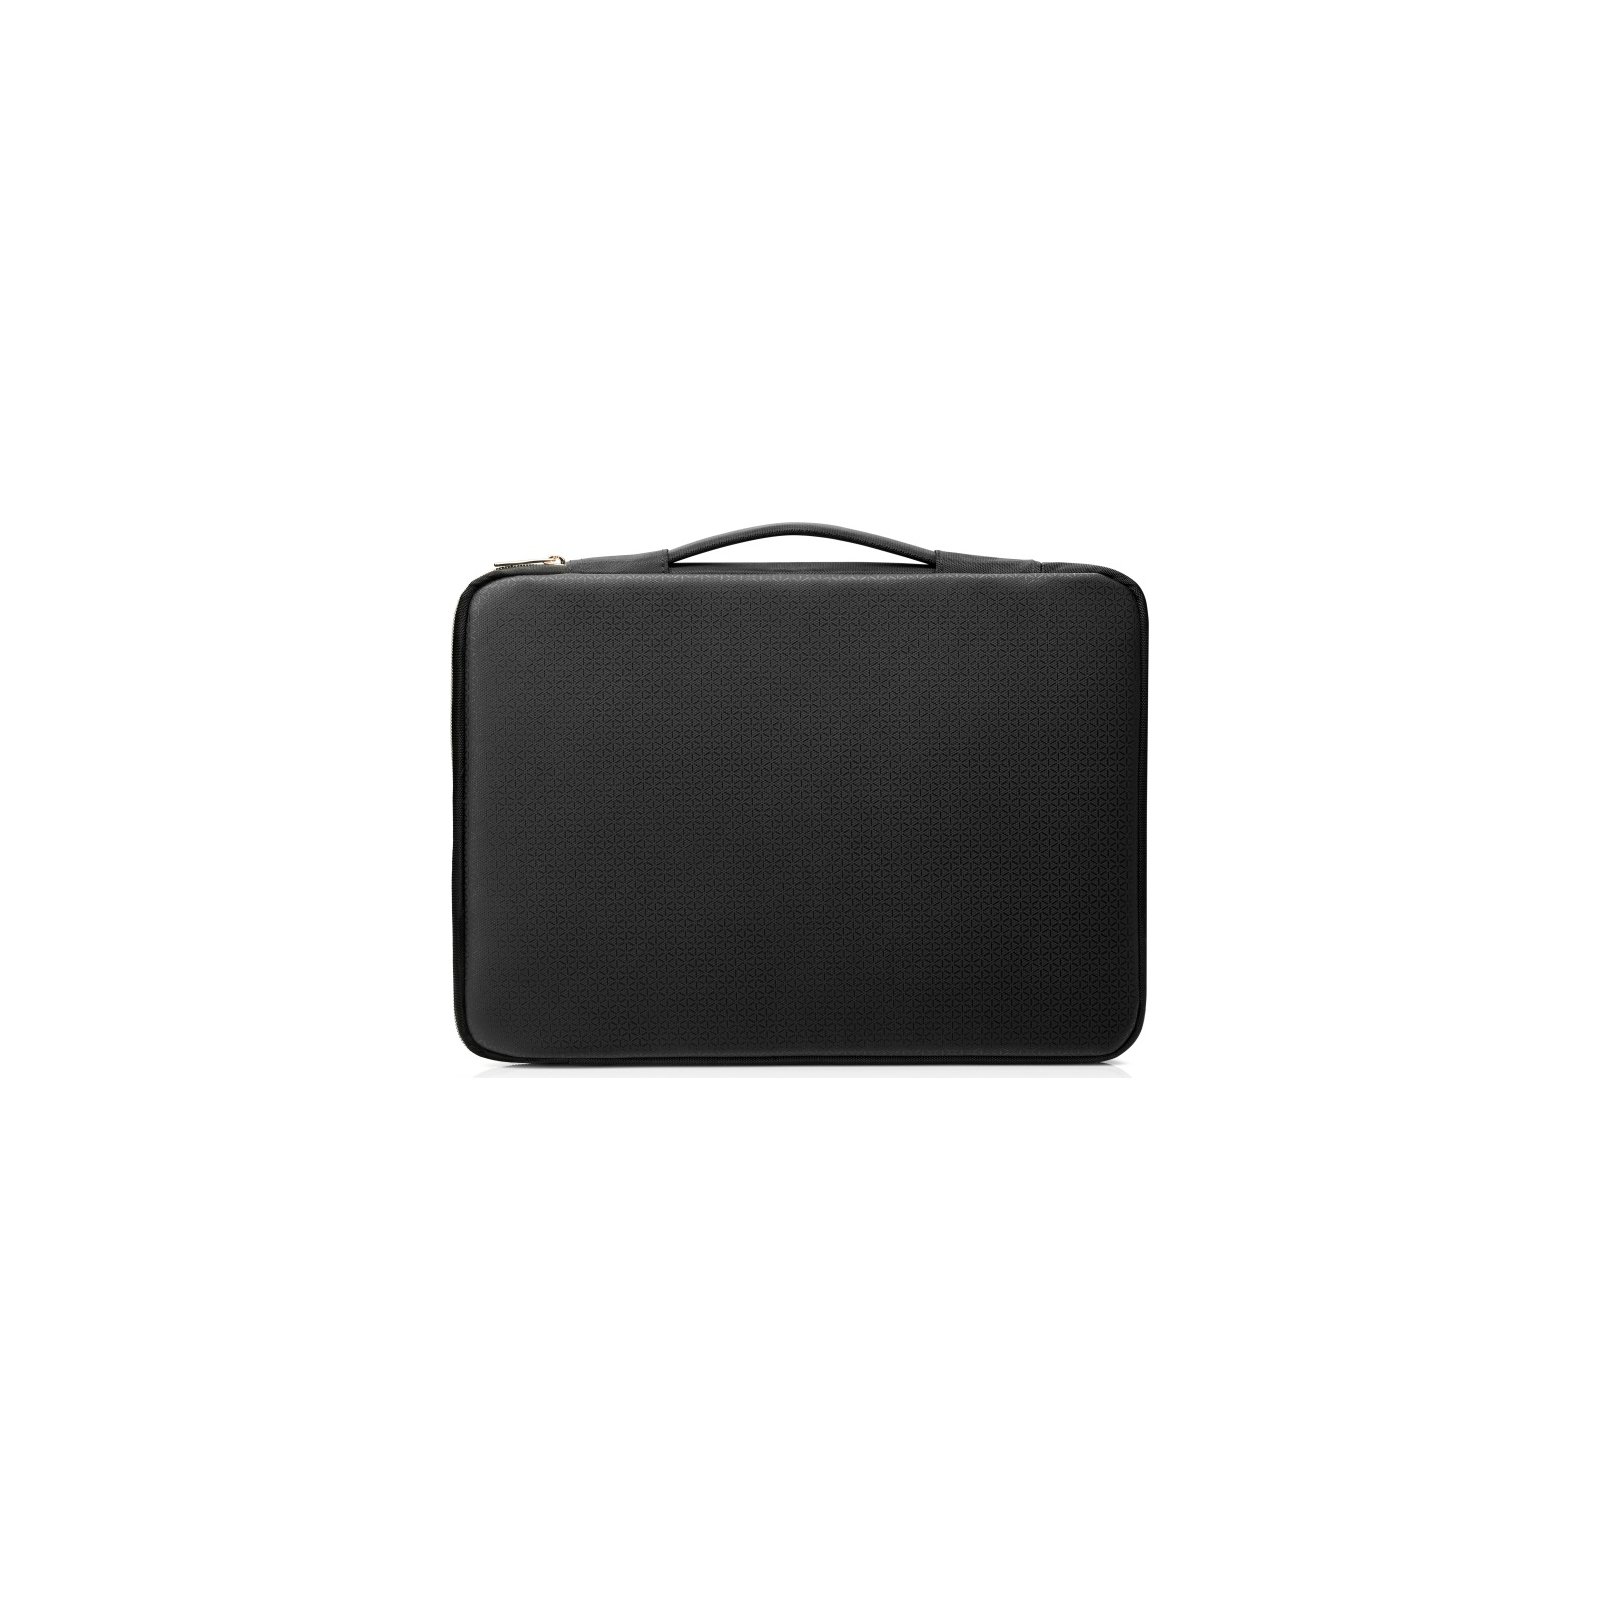 Сумка для ноутбука HP 17.3" Carry Sleeve Black/Go (3XD37AA) изображение 3